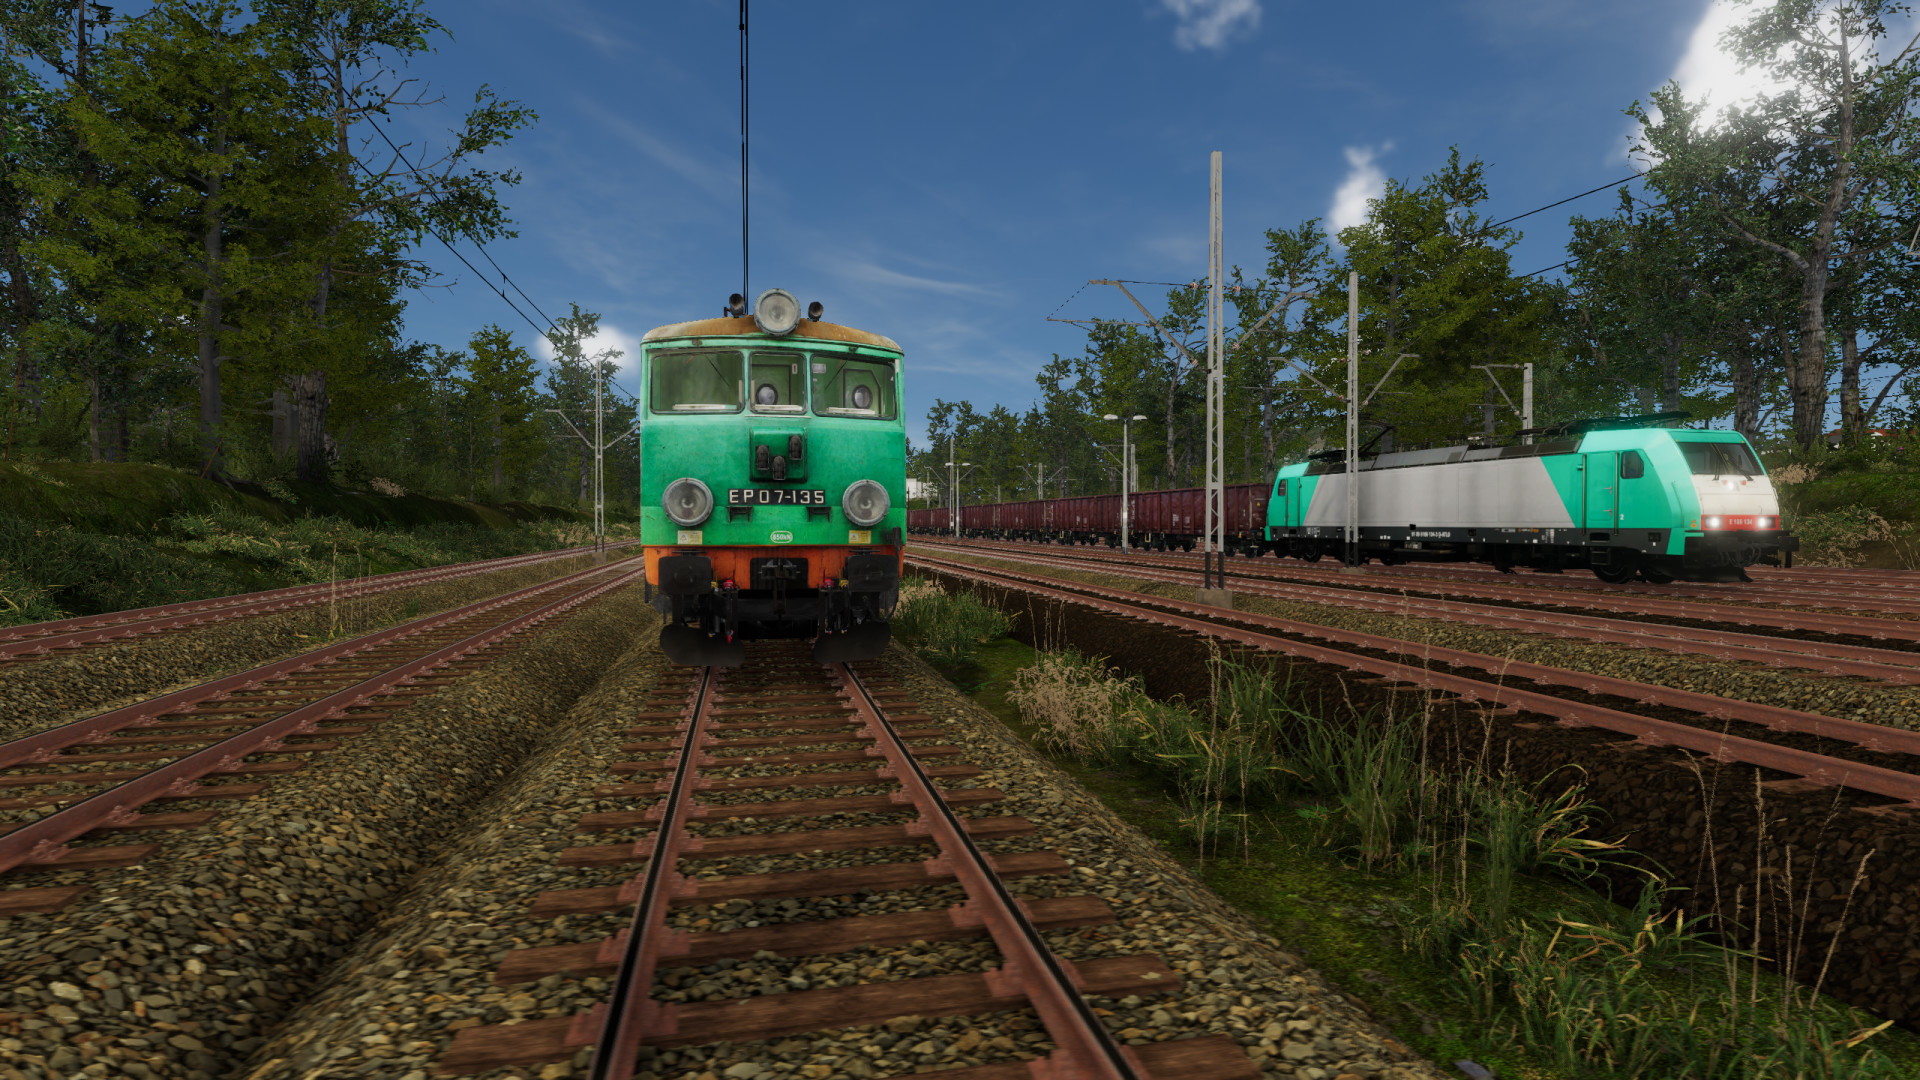 SimRail - The Railway Simulator - screenshot 11